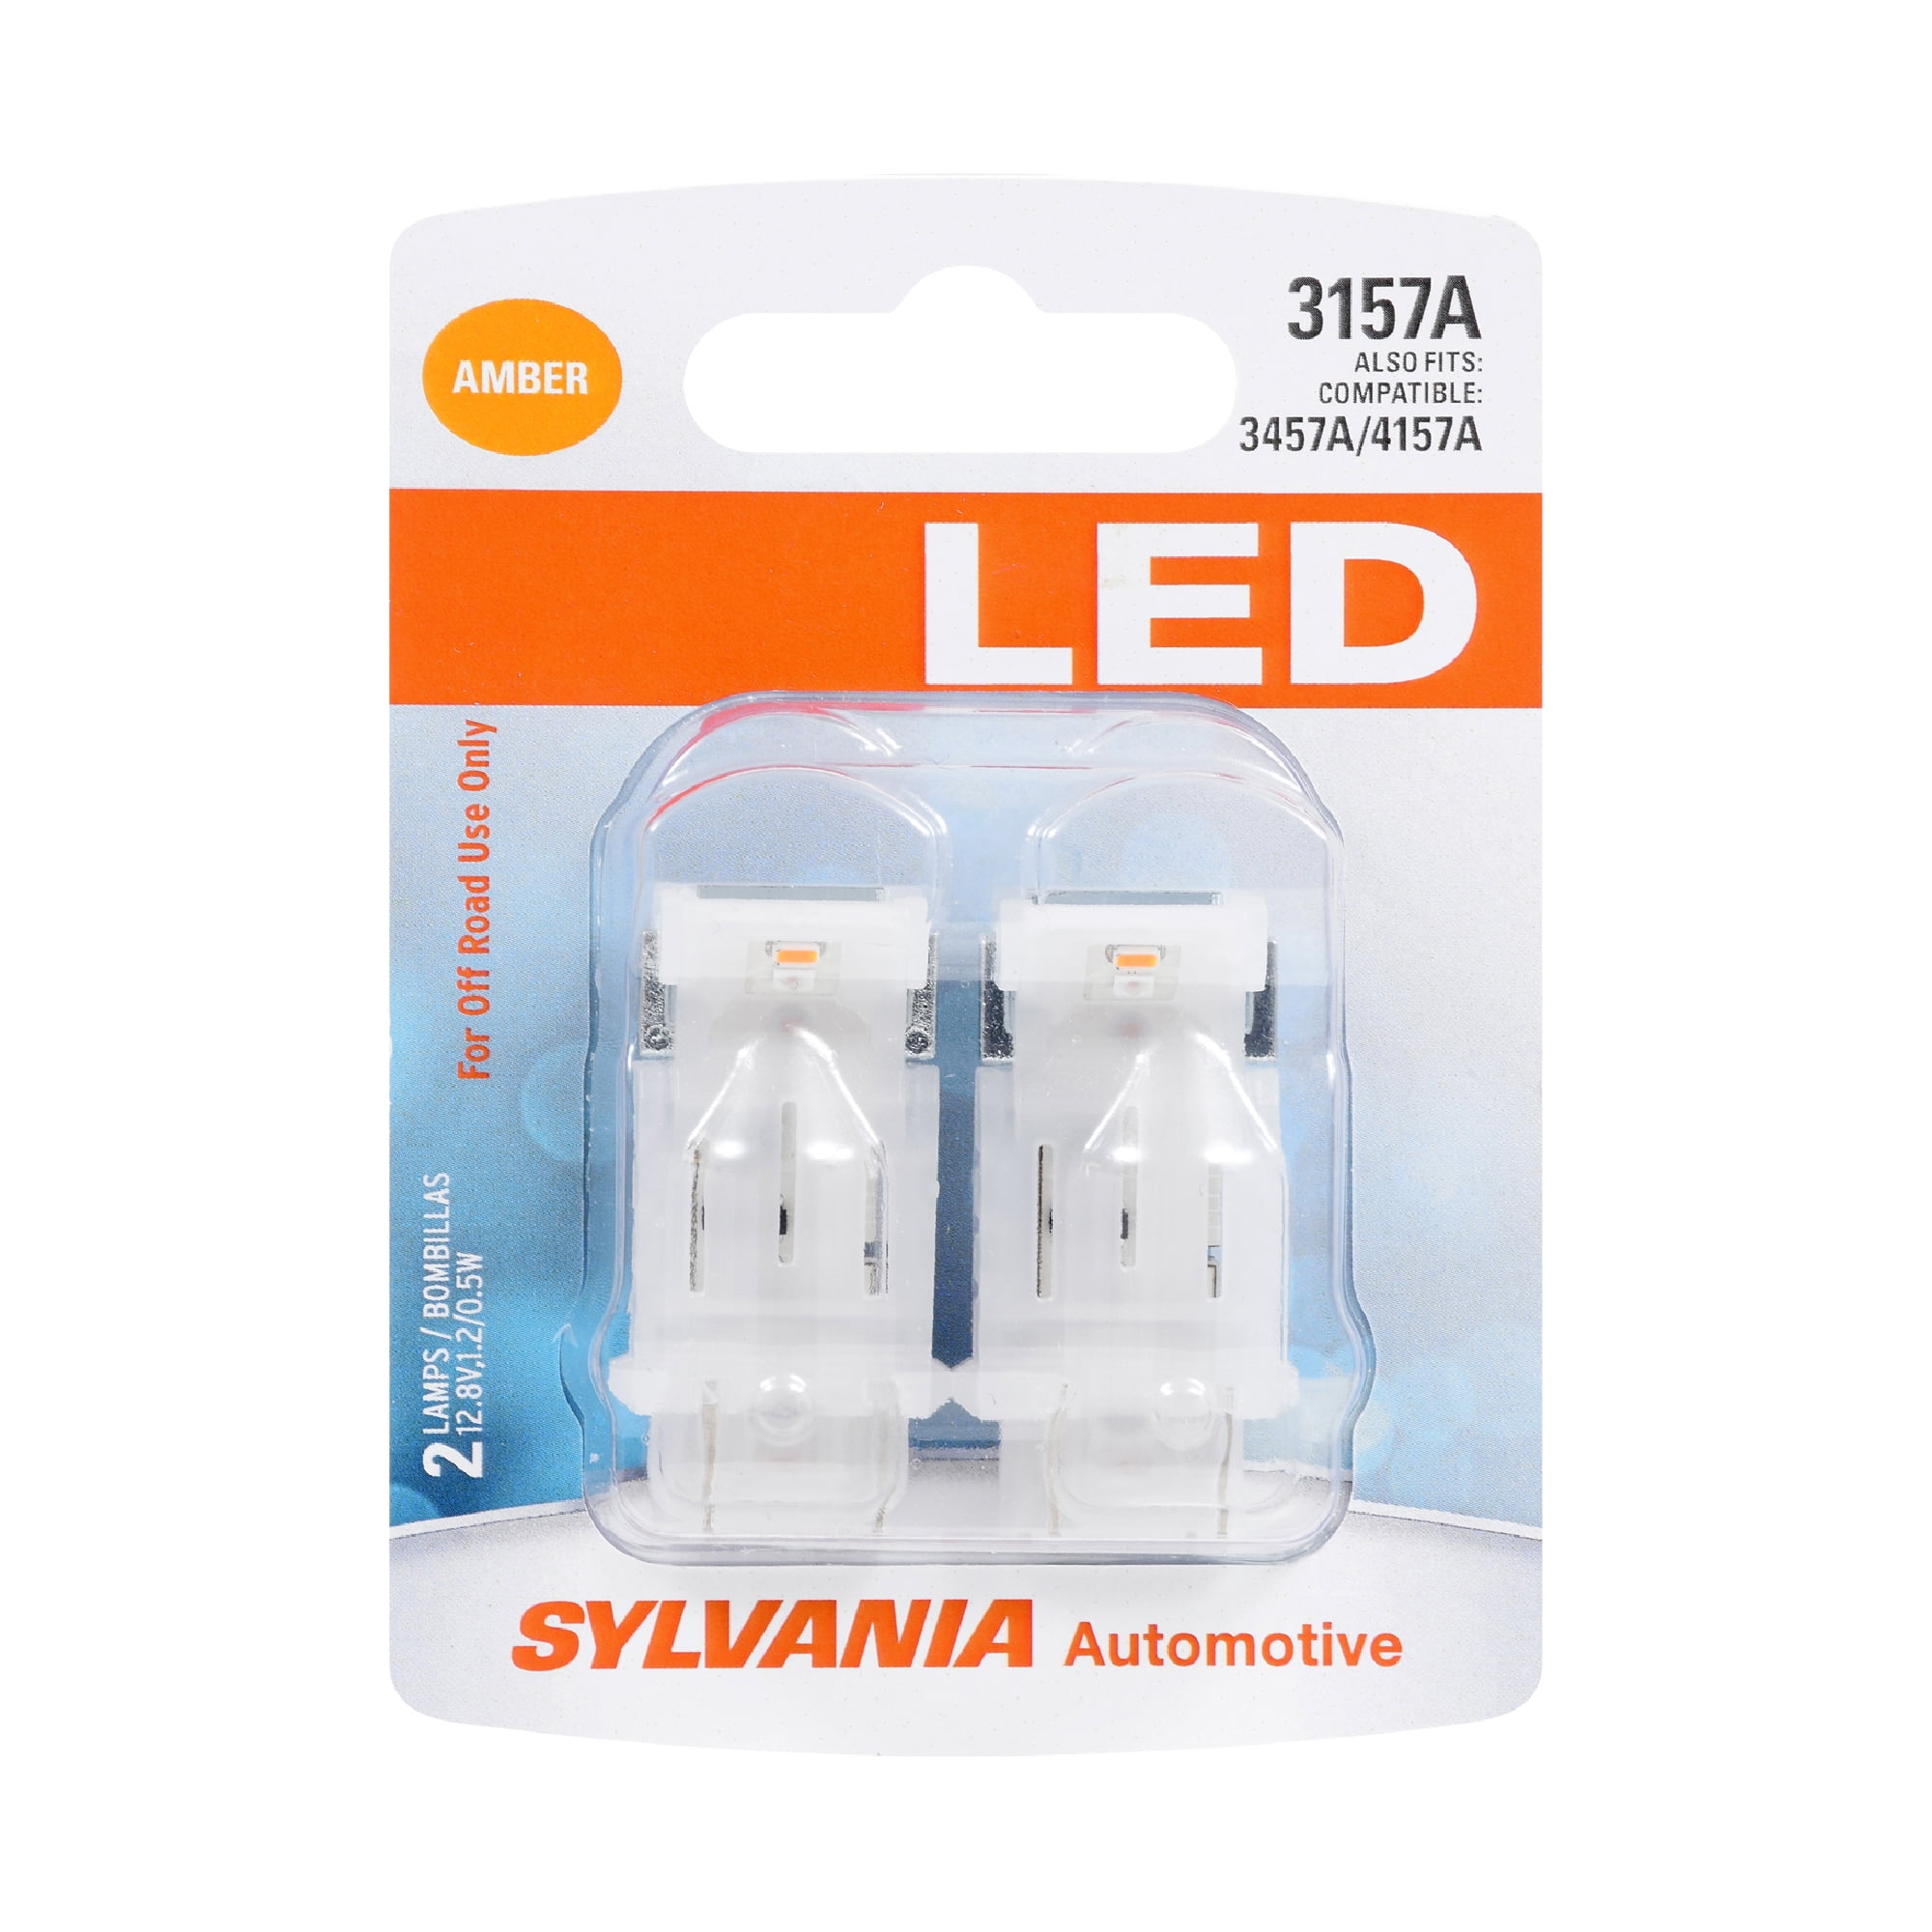 Sylvania 3157A Amber LED Automotive Mini Bulb, Pack of 2.